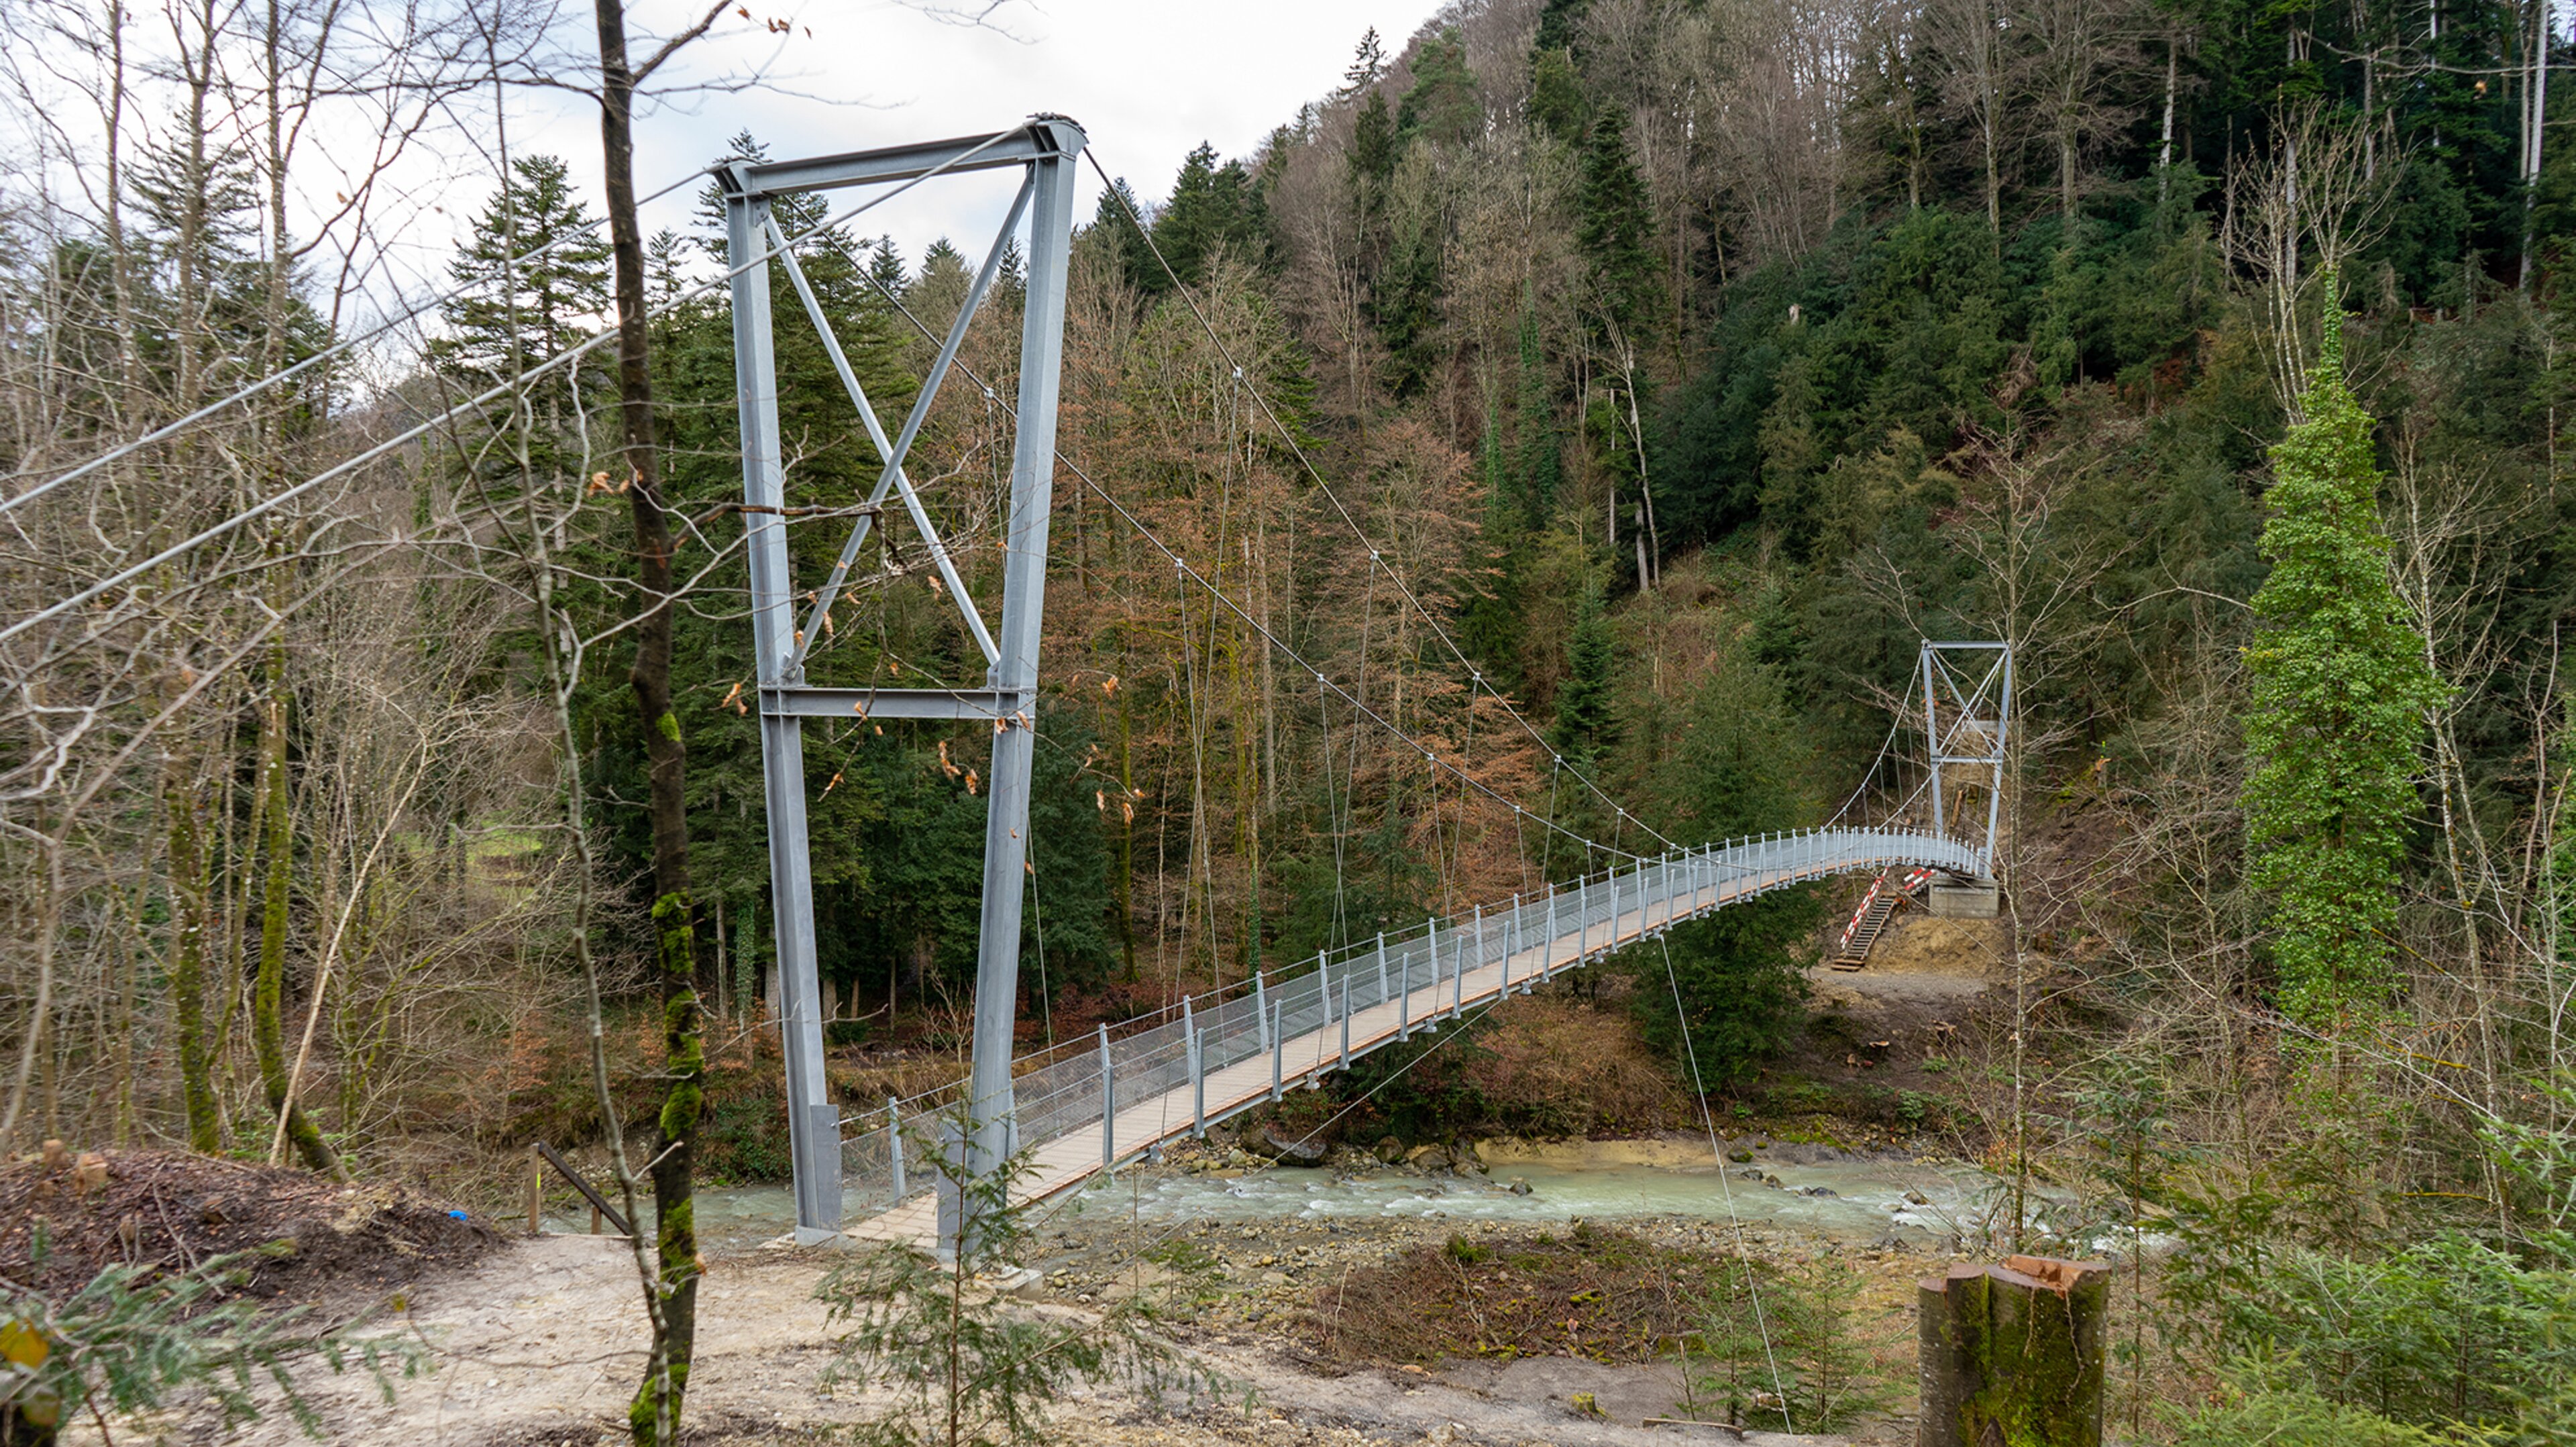 Goldach pedestrian bridge